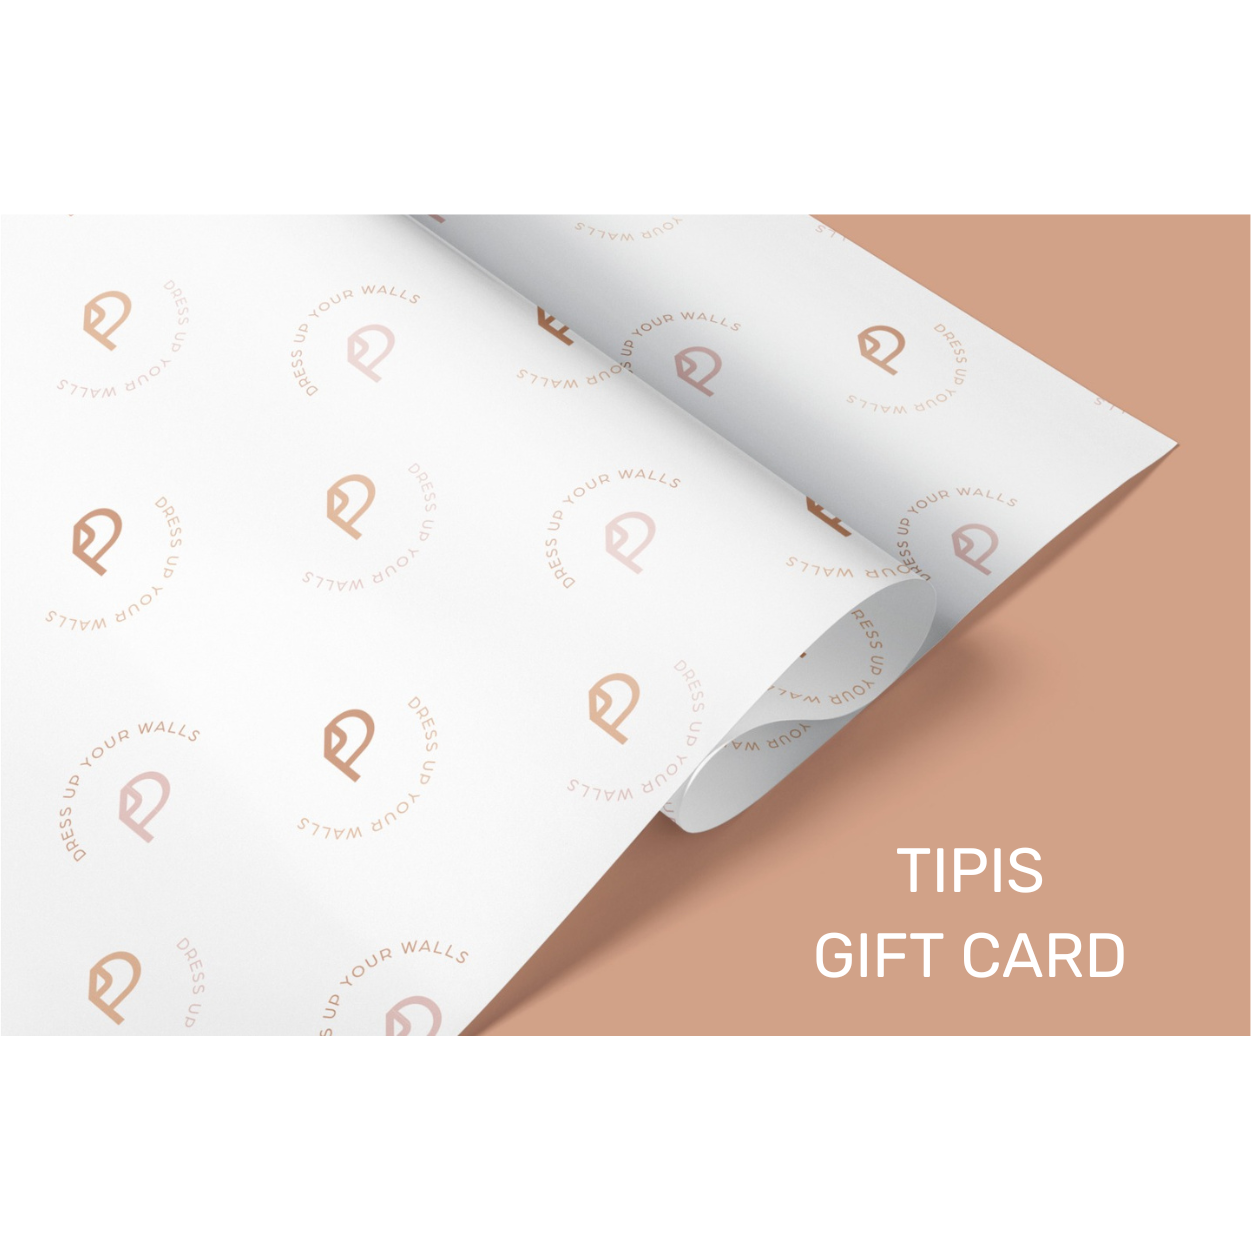 TIPIS Gift Card